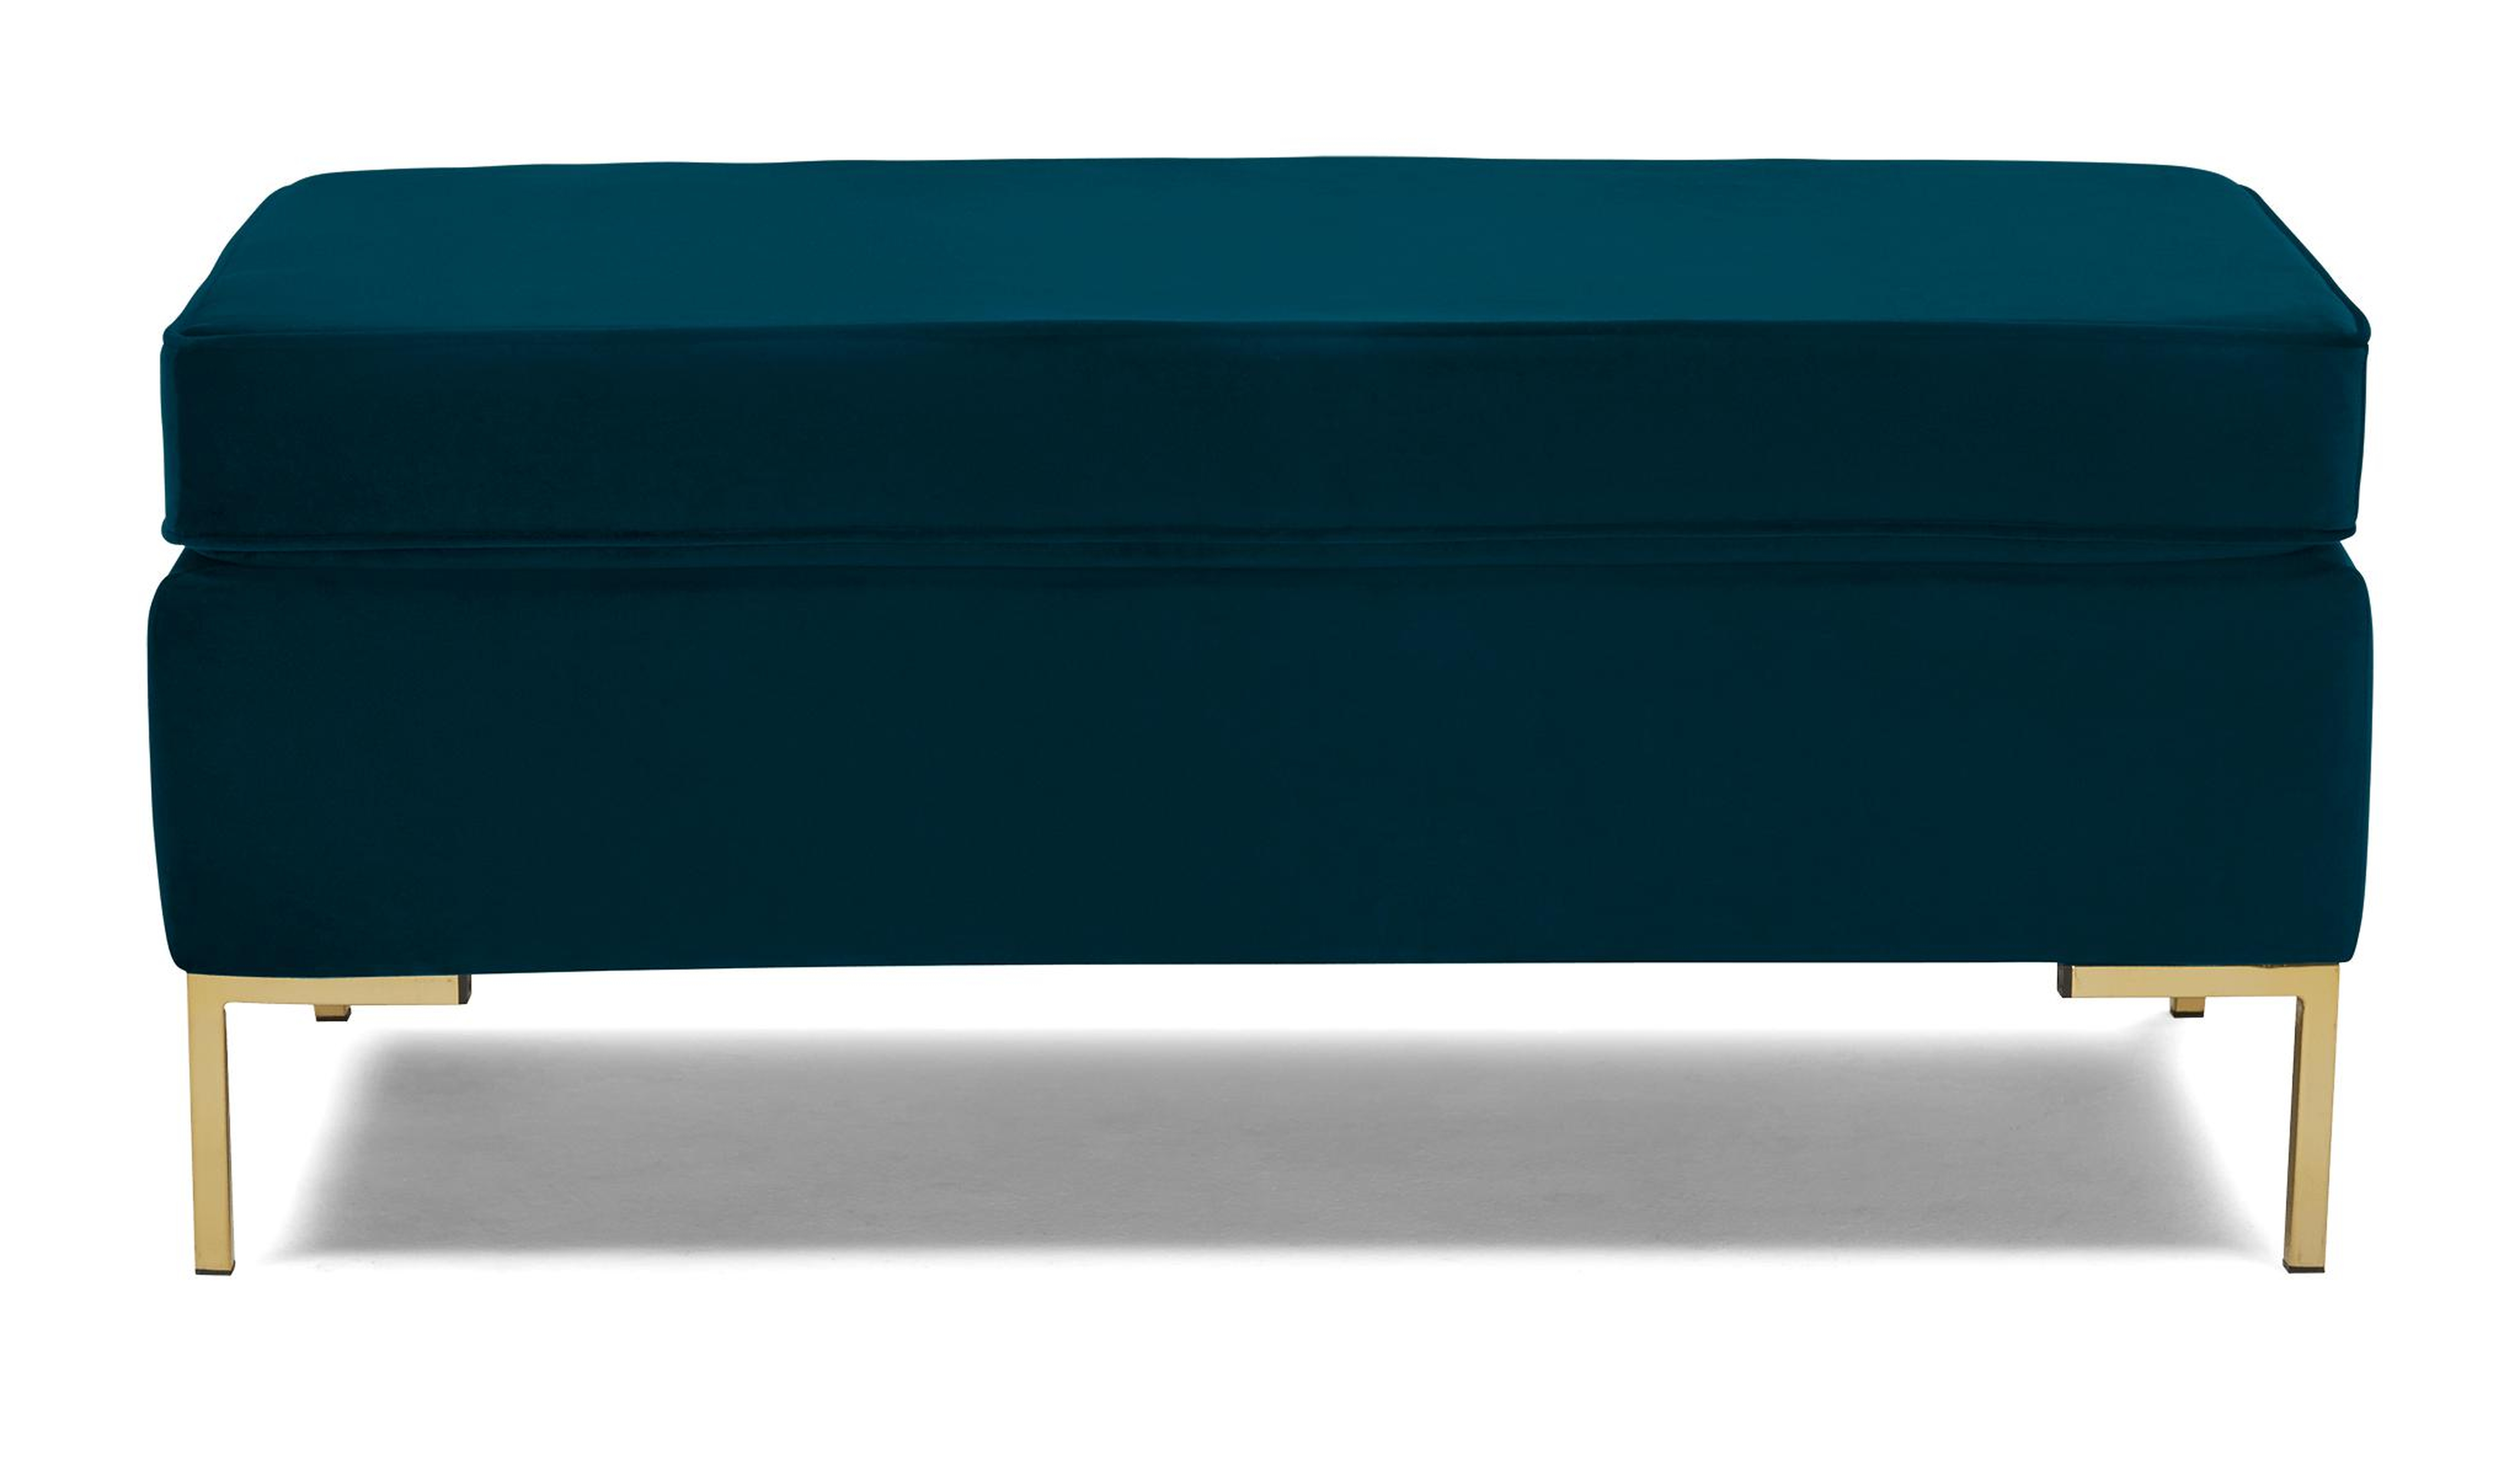 Blue Dee Mid Century Modern Bench with Storage - Key Largo Zenith Teal - Joybird